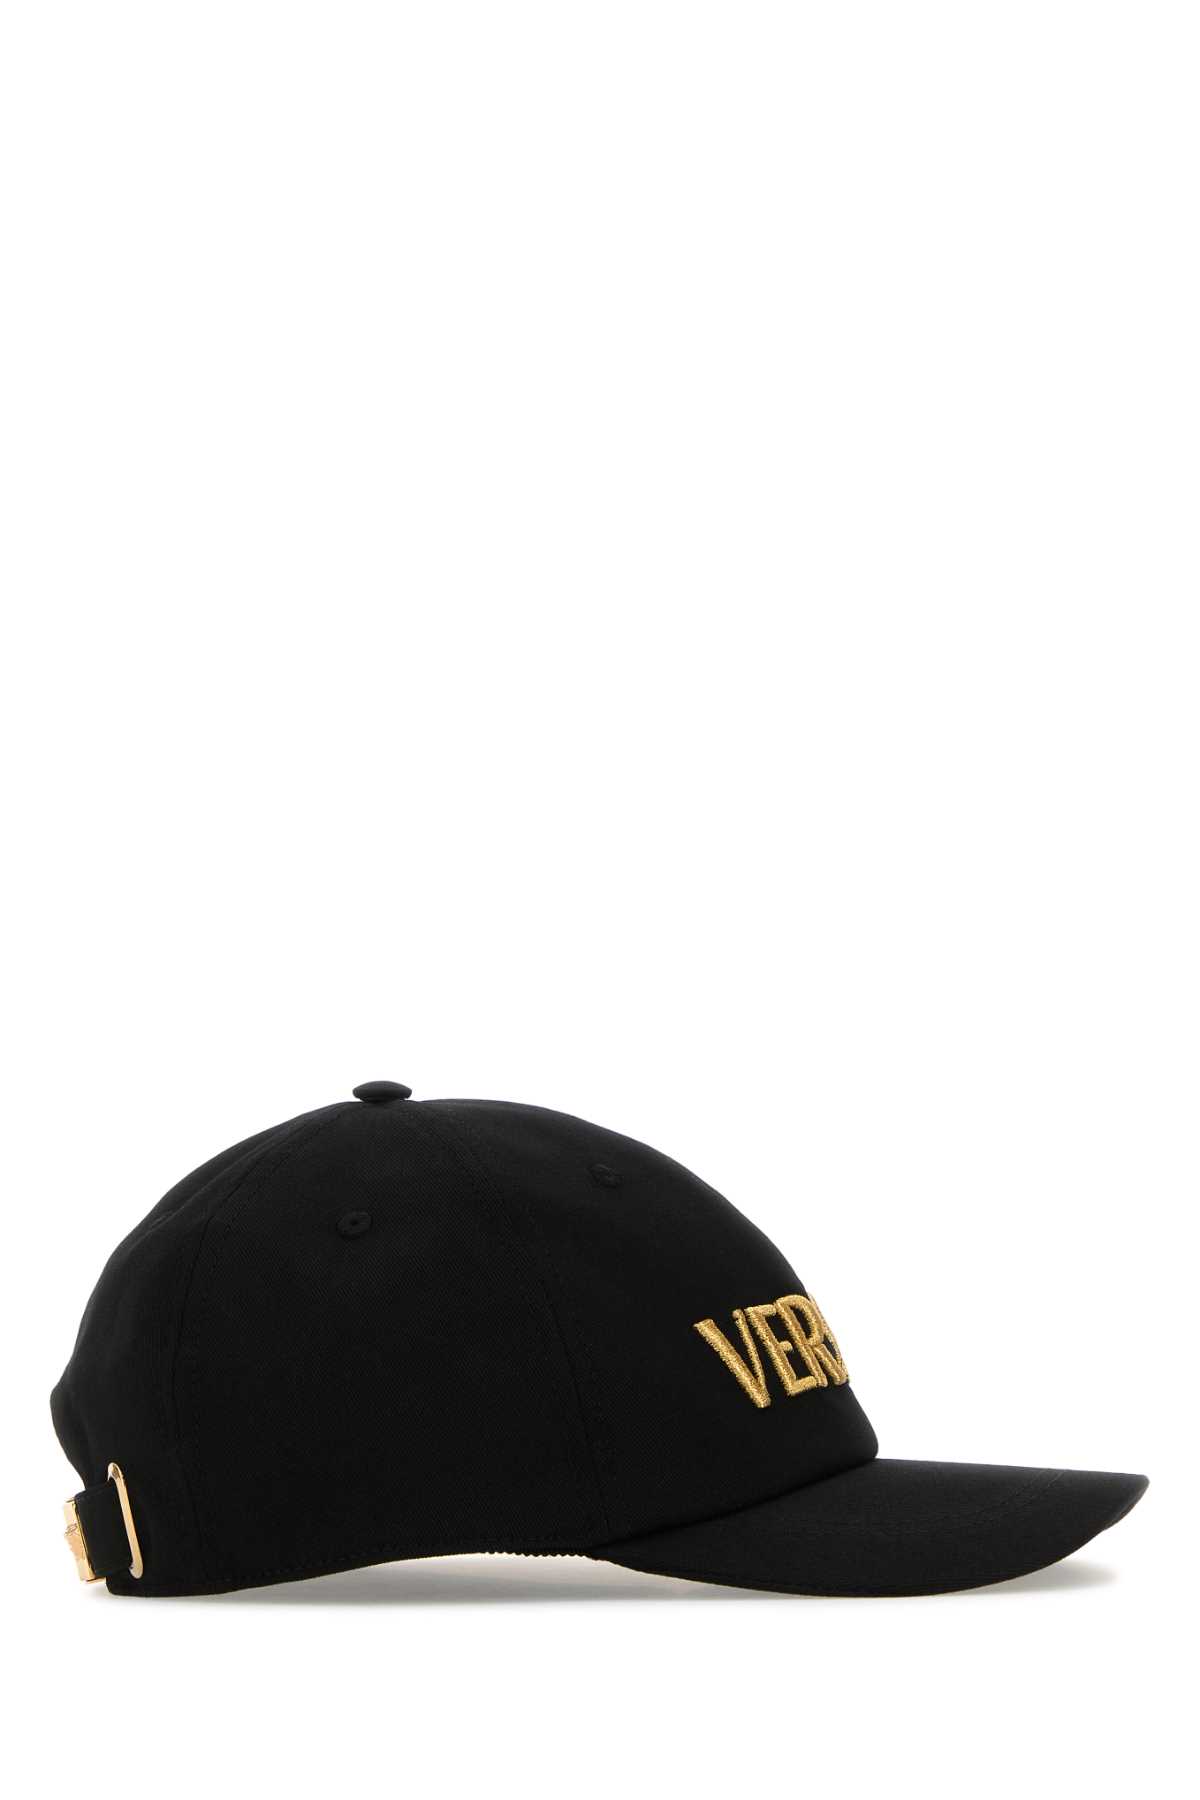 Versace Black Cotton Baseball Cap In Nerooro